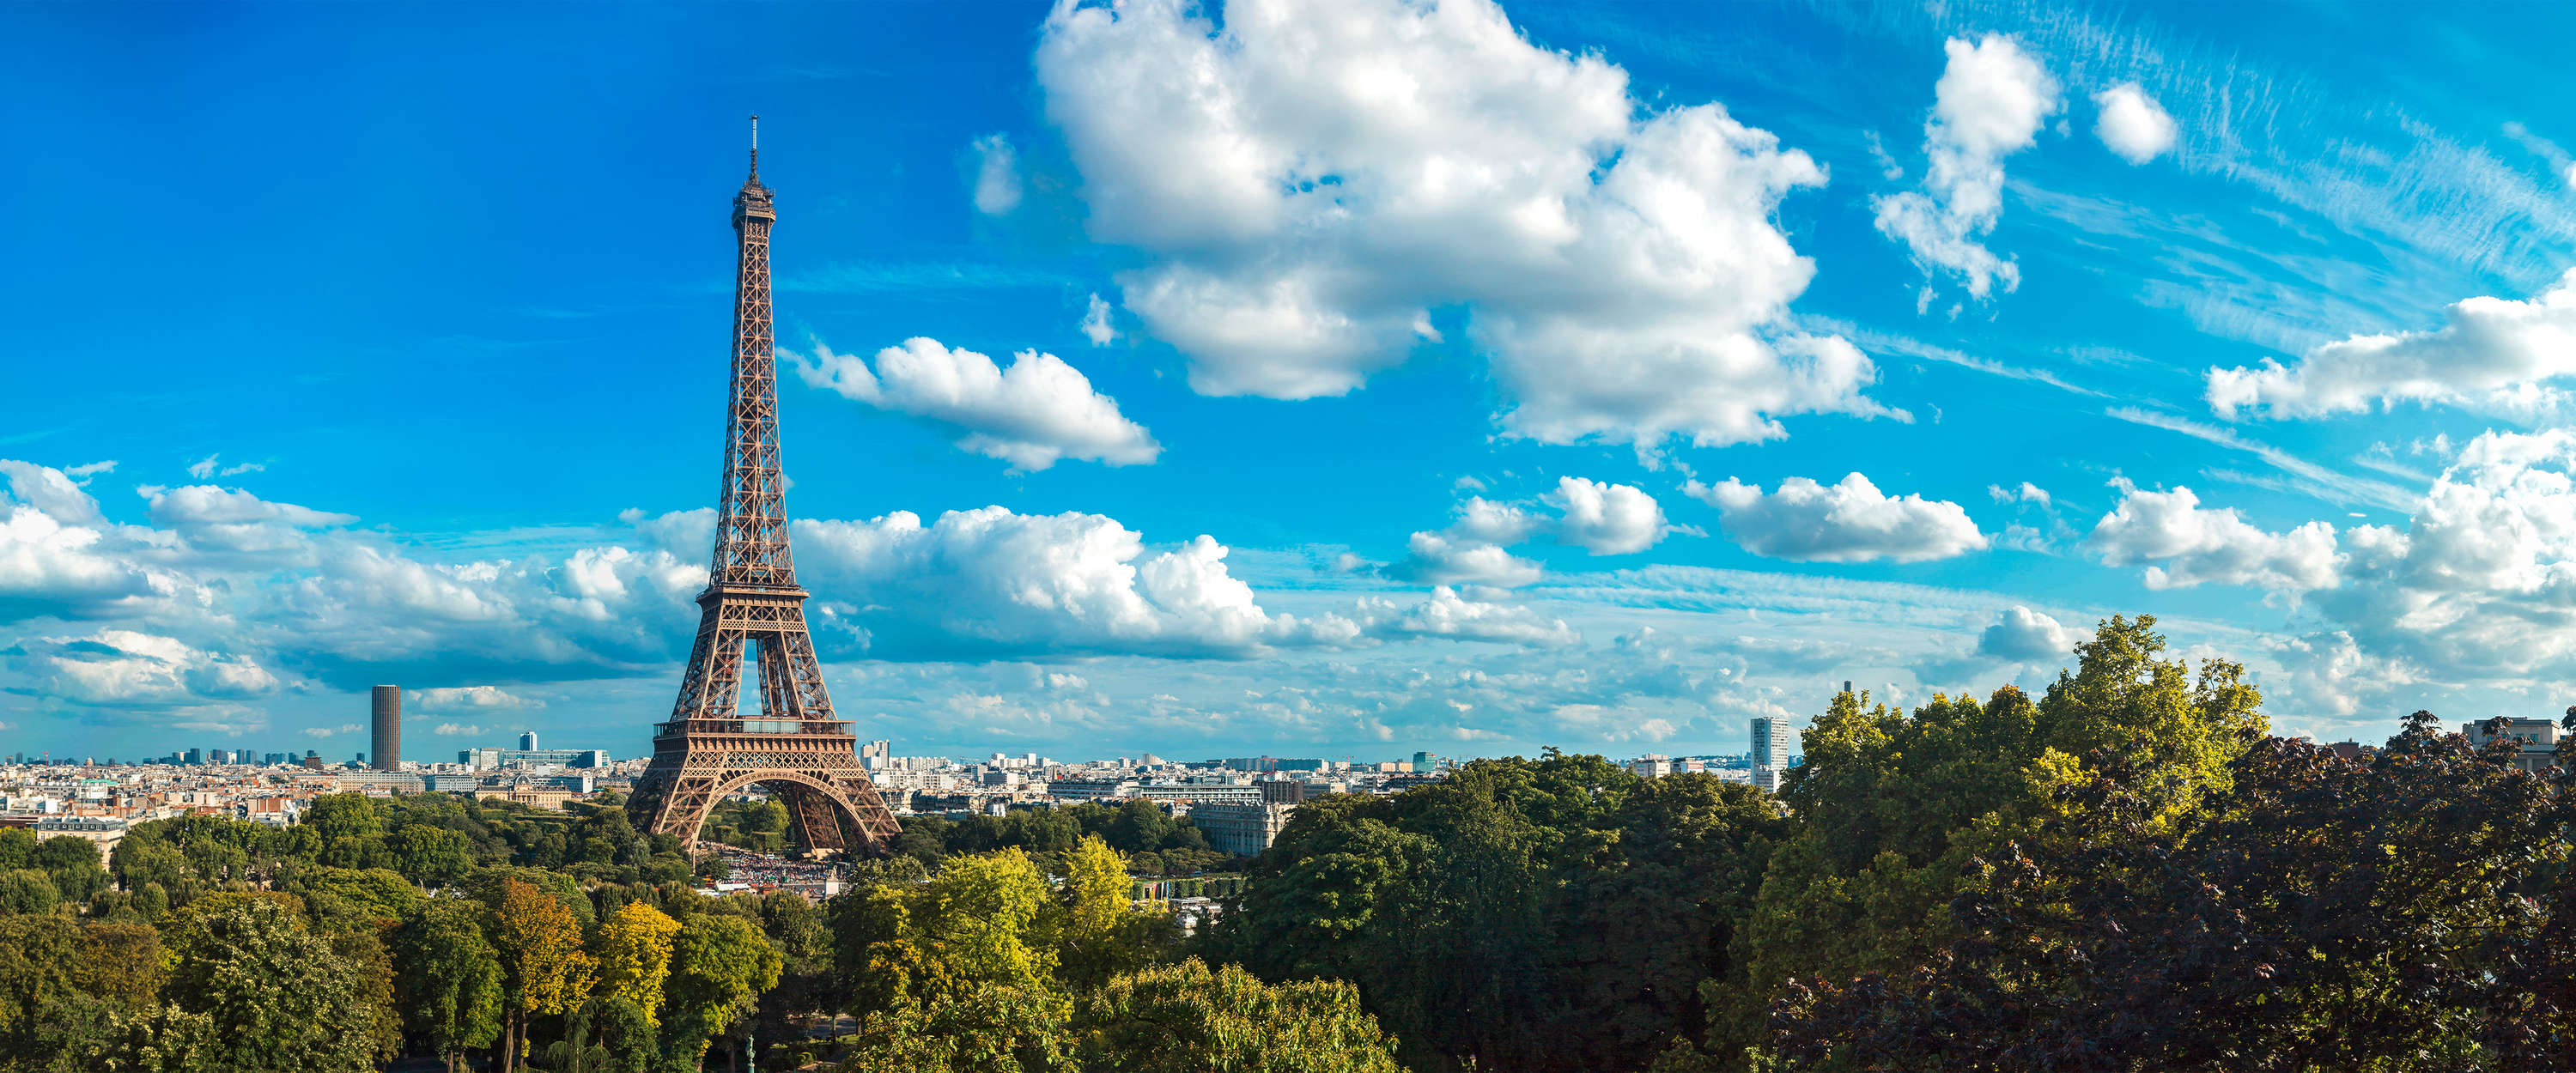             Eiffel Tower & Paris skyline mural
        